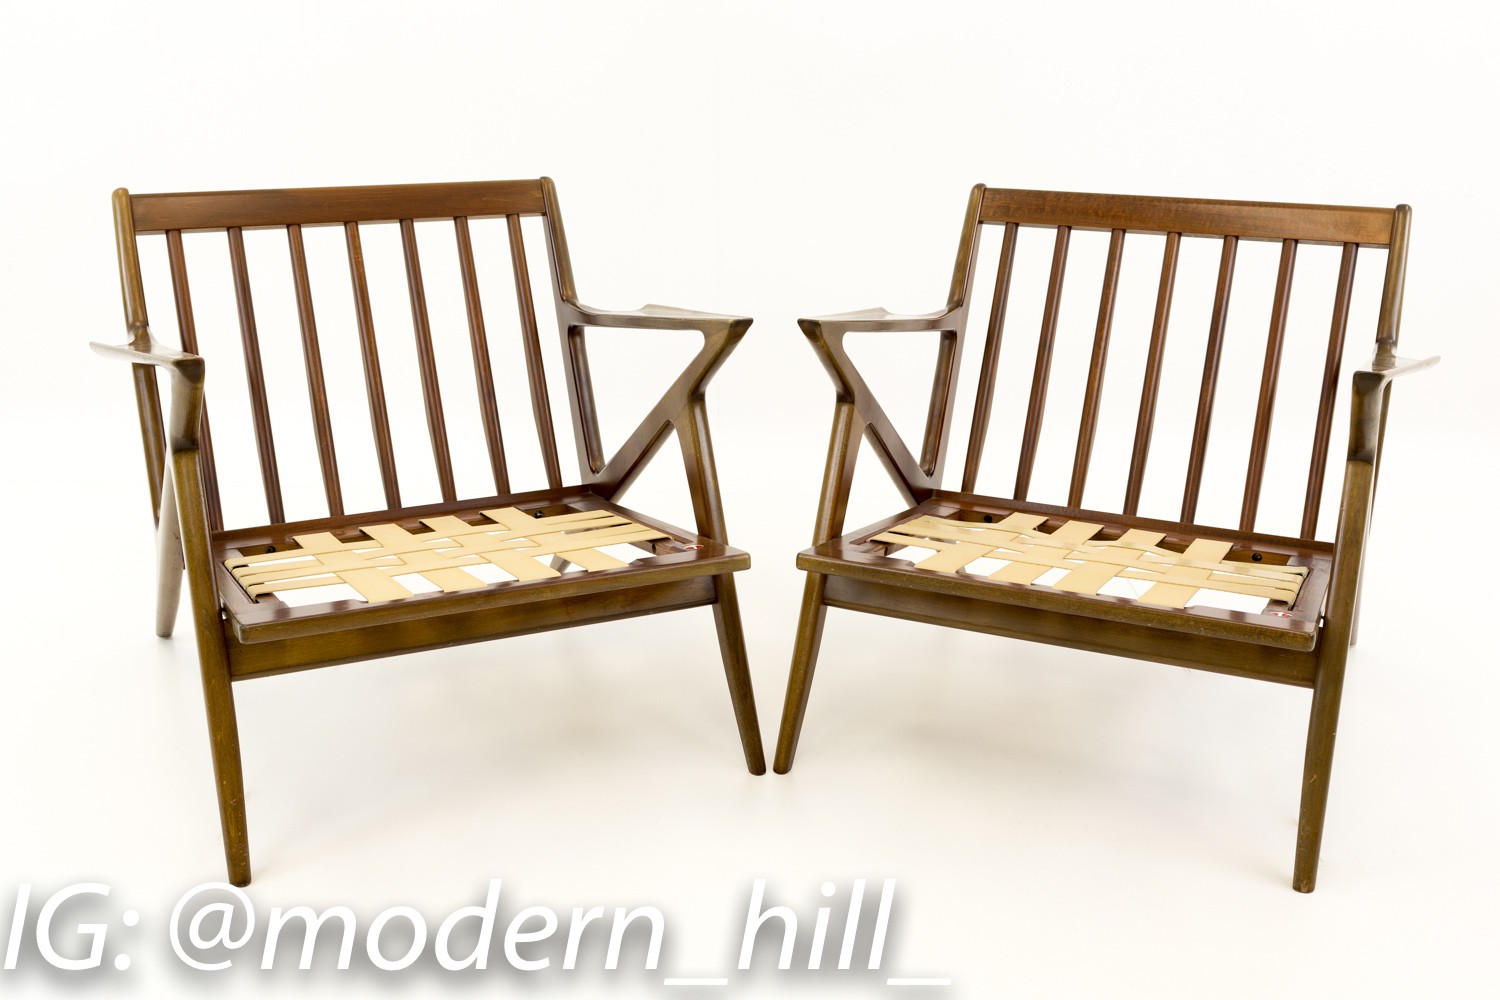 Kofod Larsen for Selig Z Chairs - Rare Mid Century